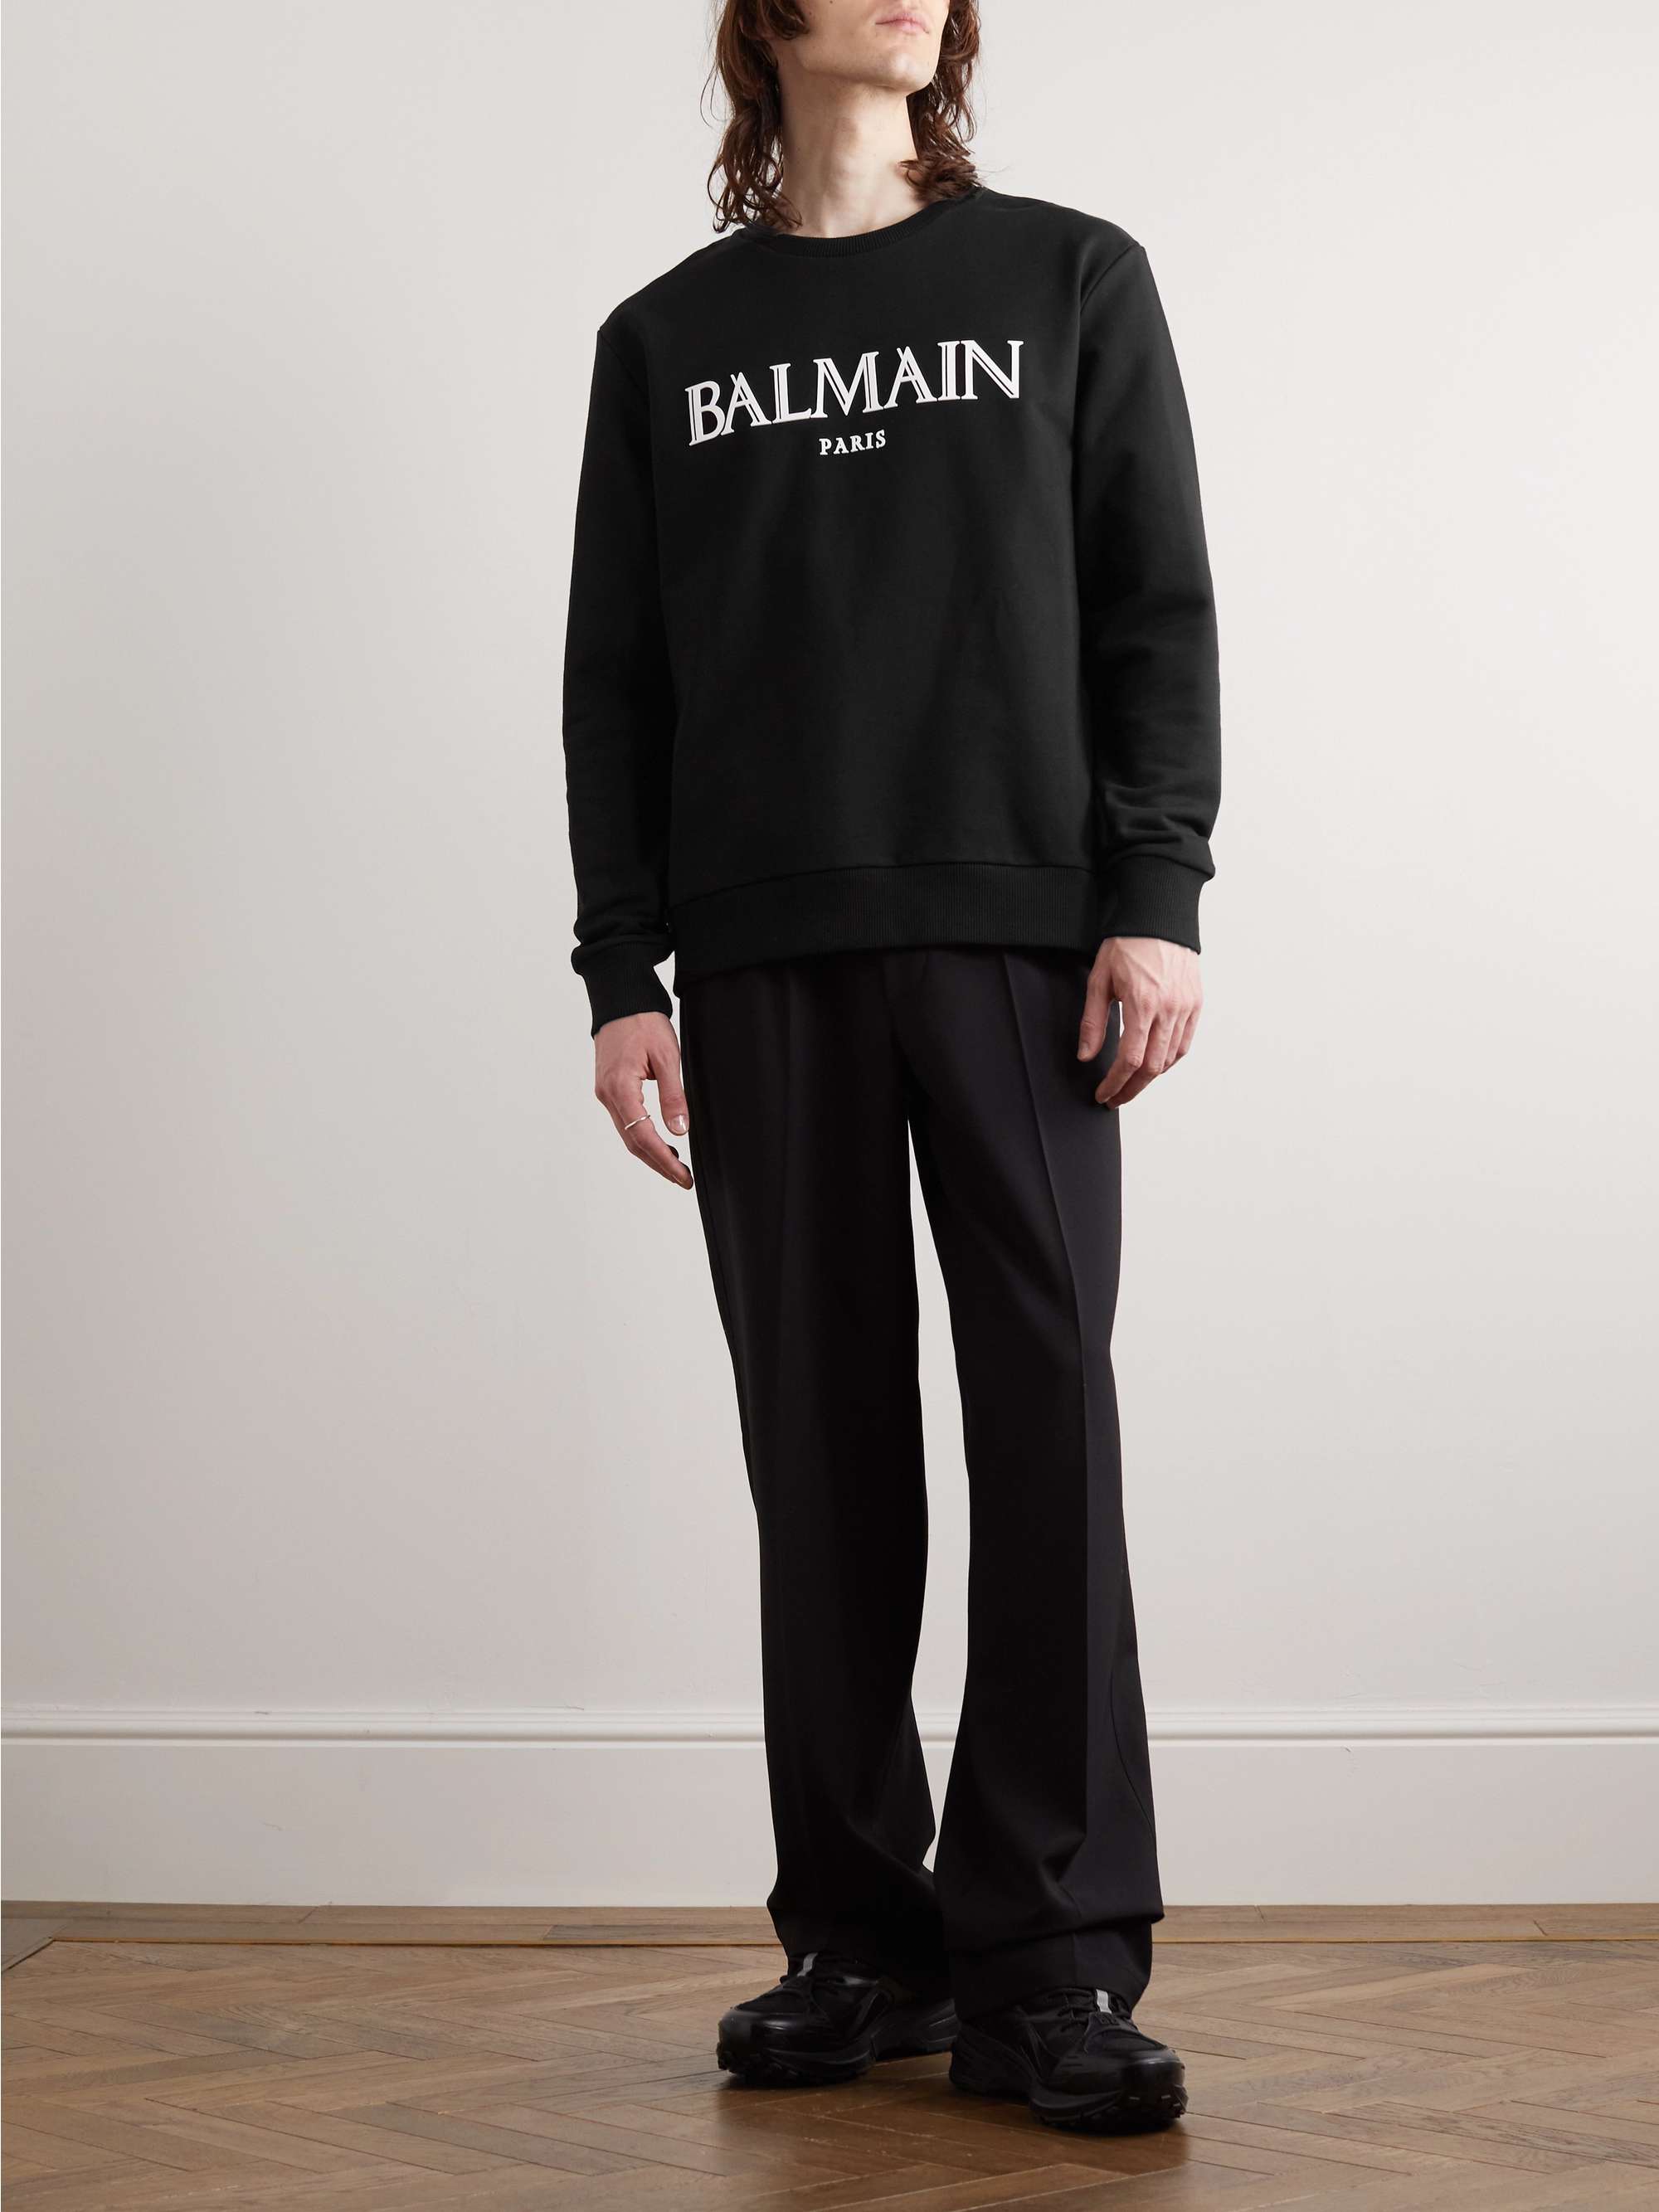 BALMAIN Logo-Flocked Cotton-Jersey Sweatshirt for Men | MR PORTER